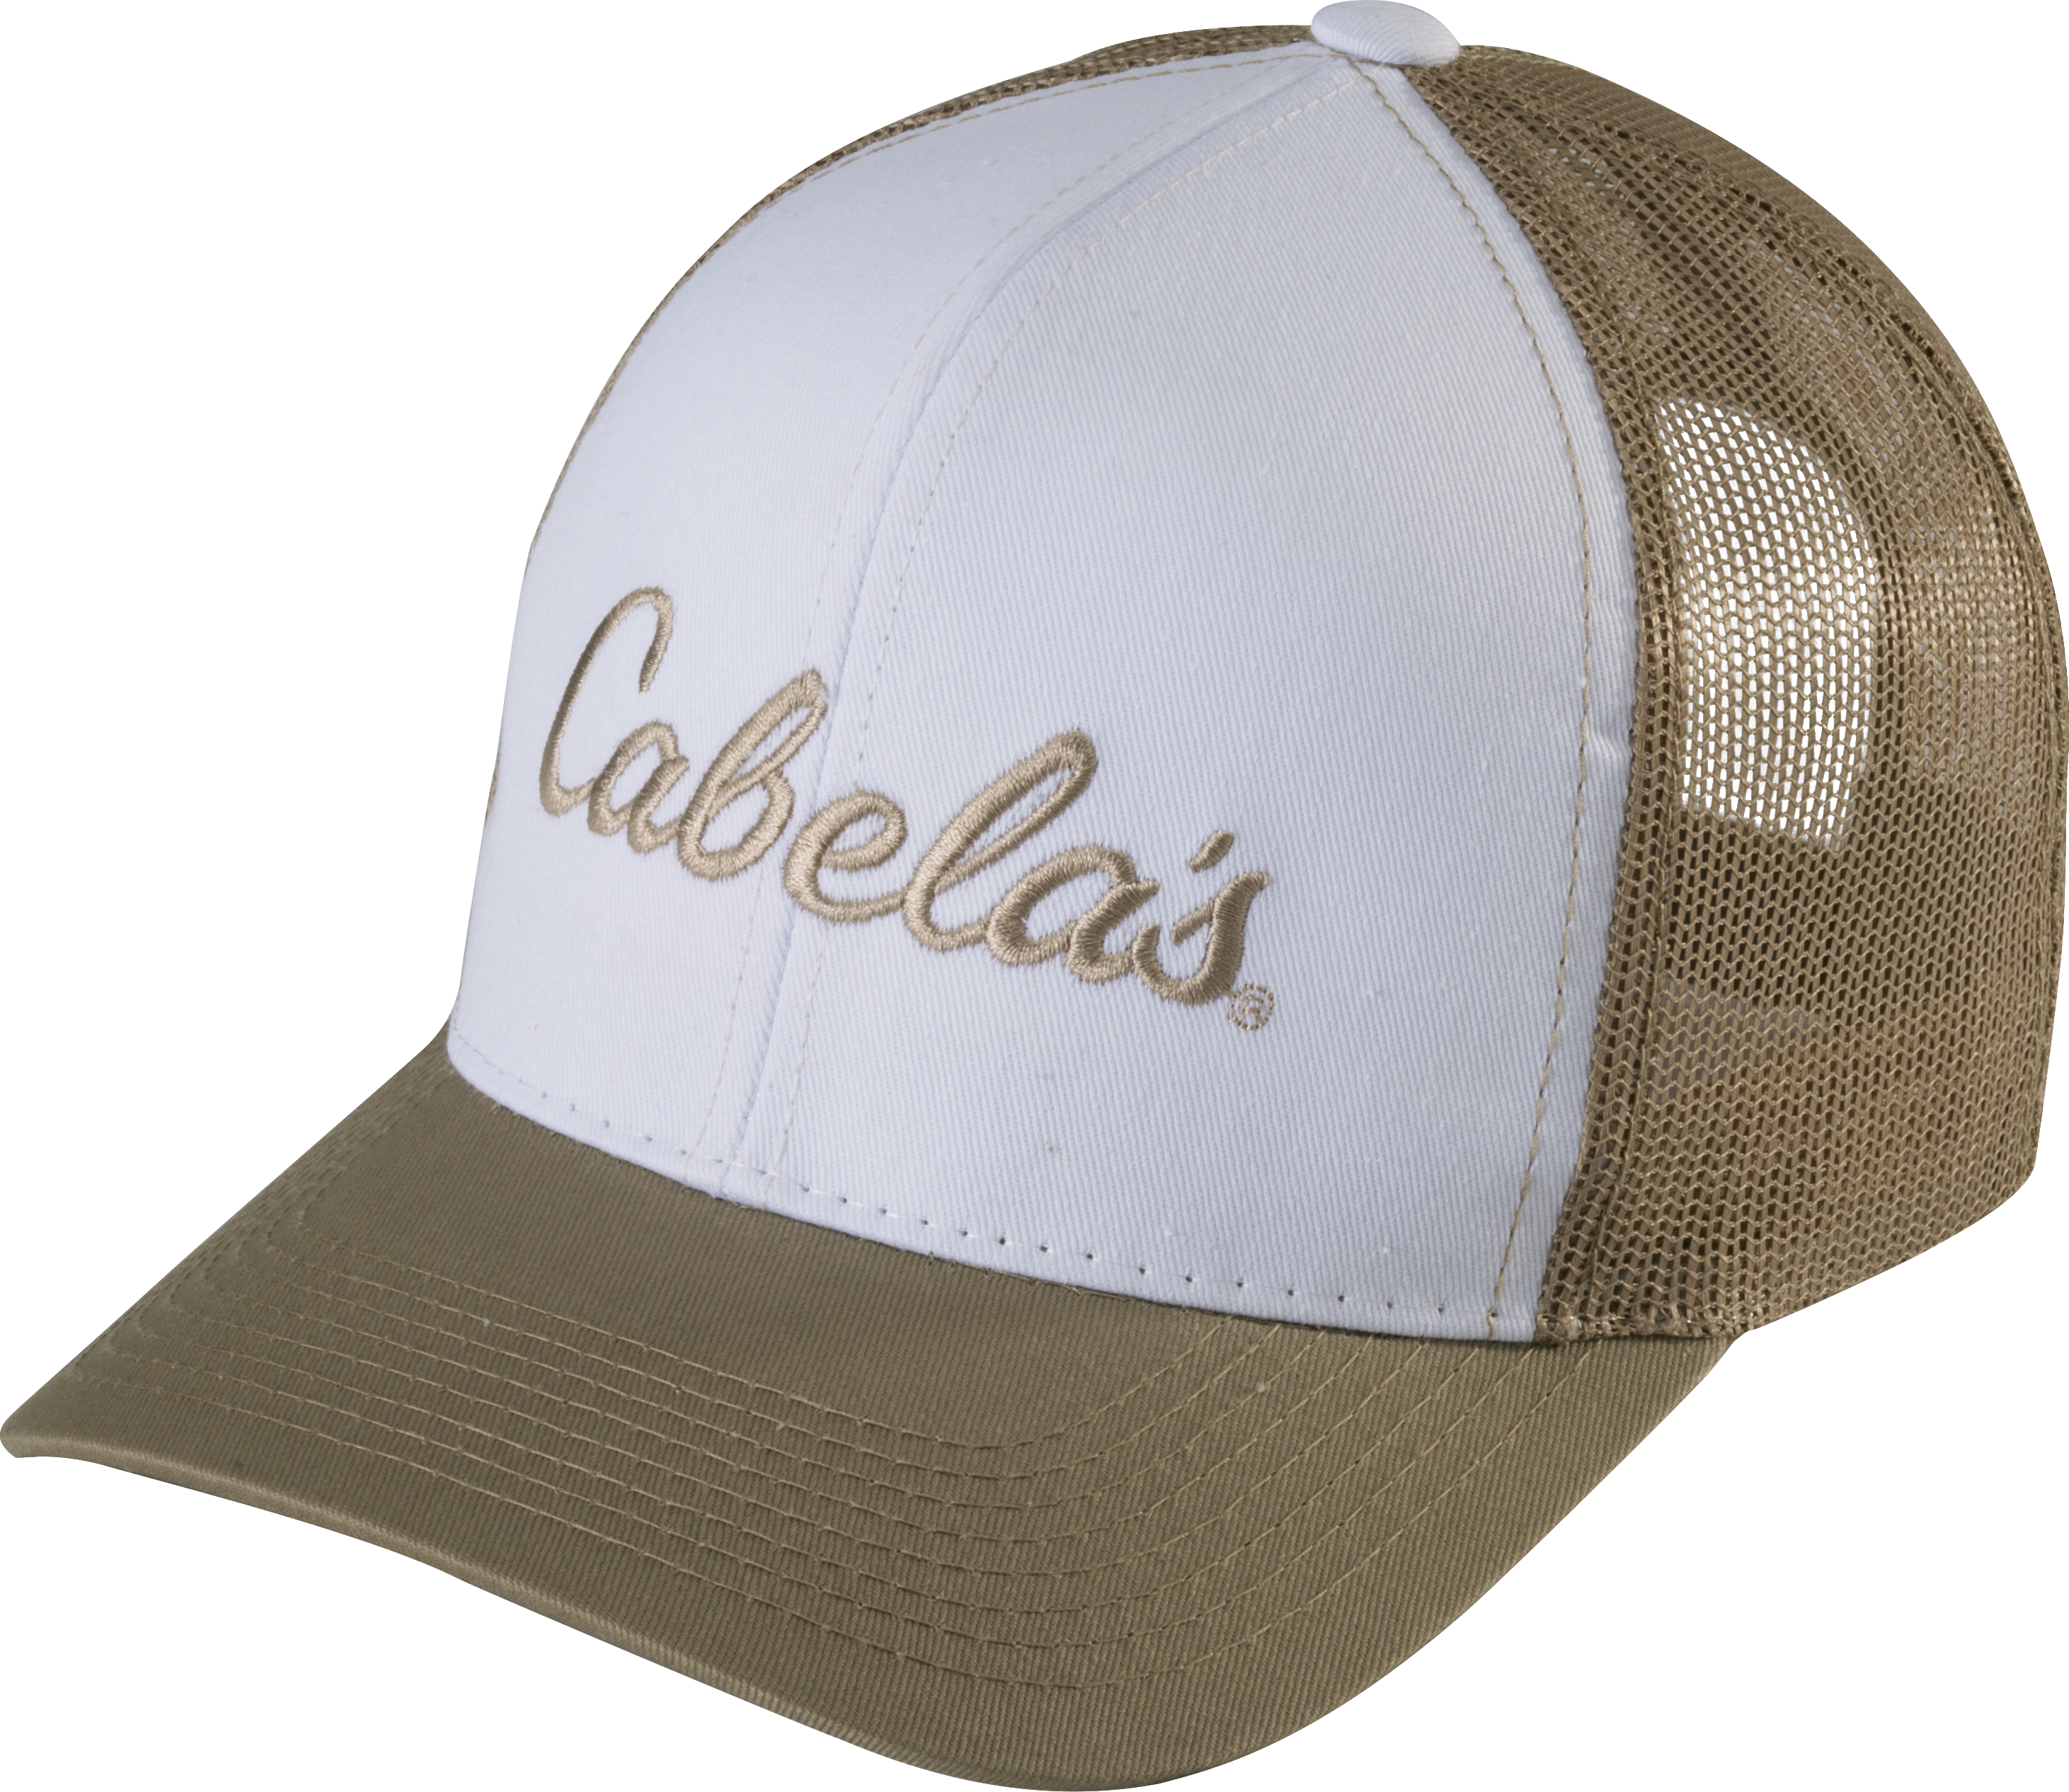 Cabela's Embroidered Mesh Back Cap